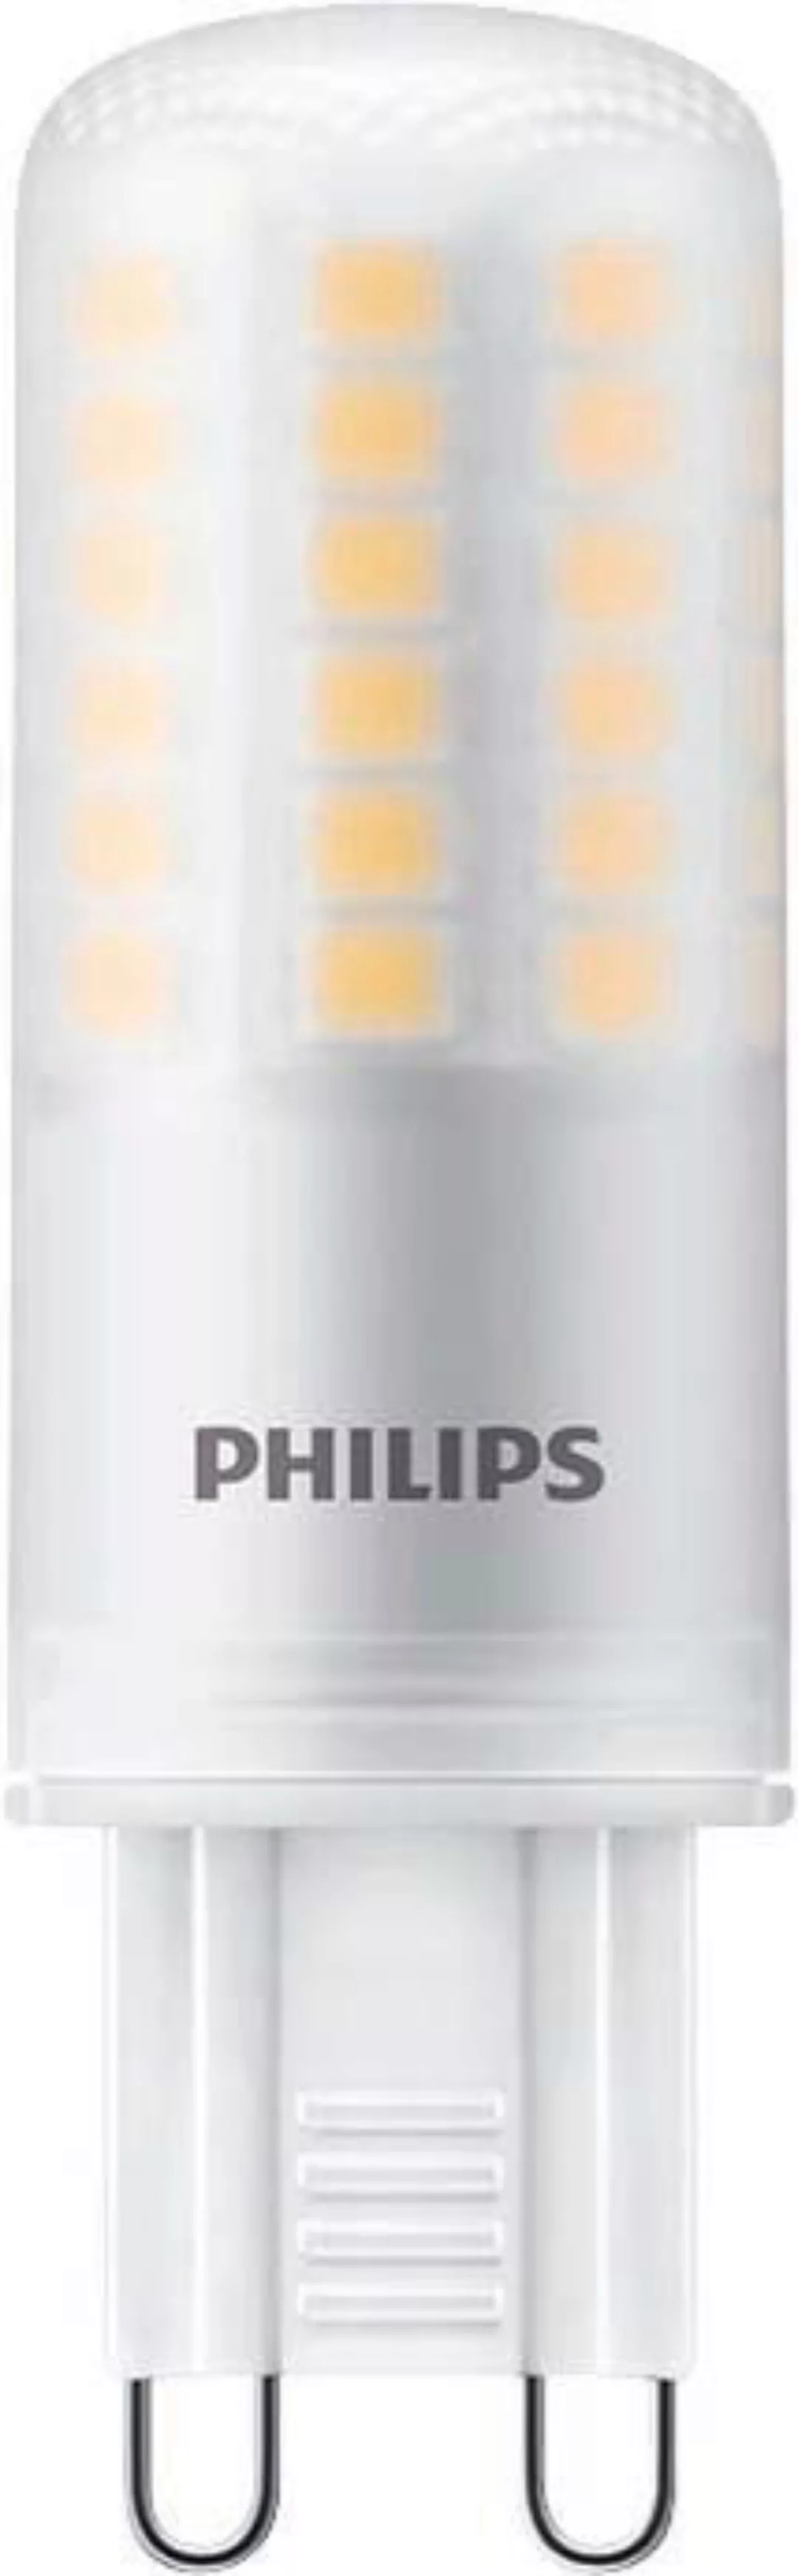 Philips Lighting LED-Lampe G9 2700K CoreProLED #65780200 günstig online kaufen